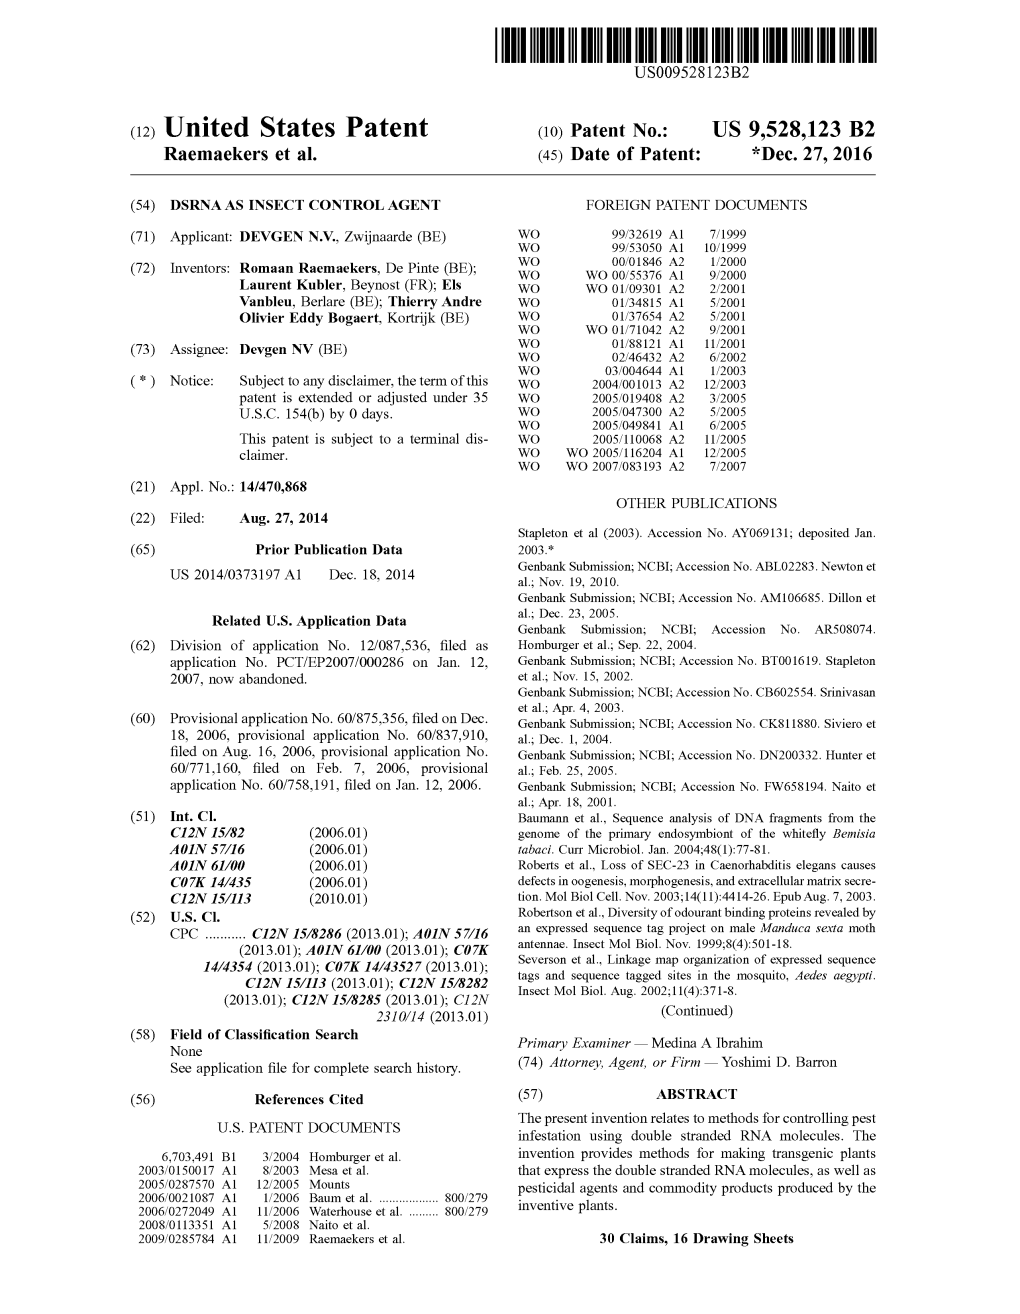 (12) United States Patent (10) Patent No.: US 9,528,123 B2 Raemaekers Et Al